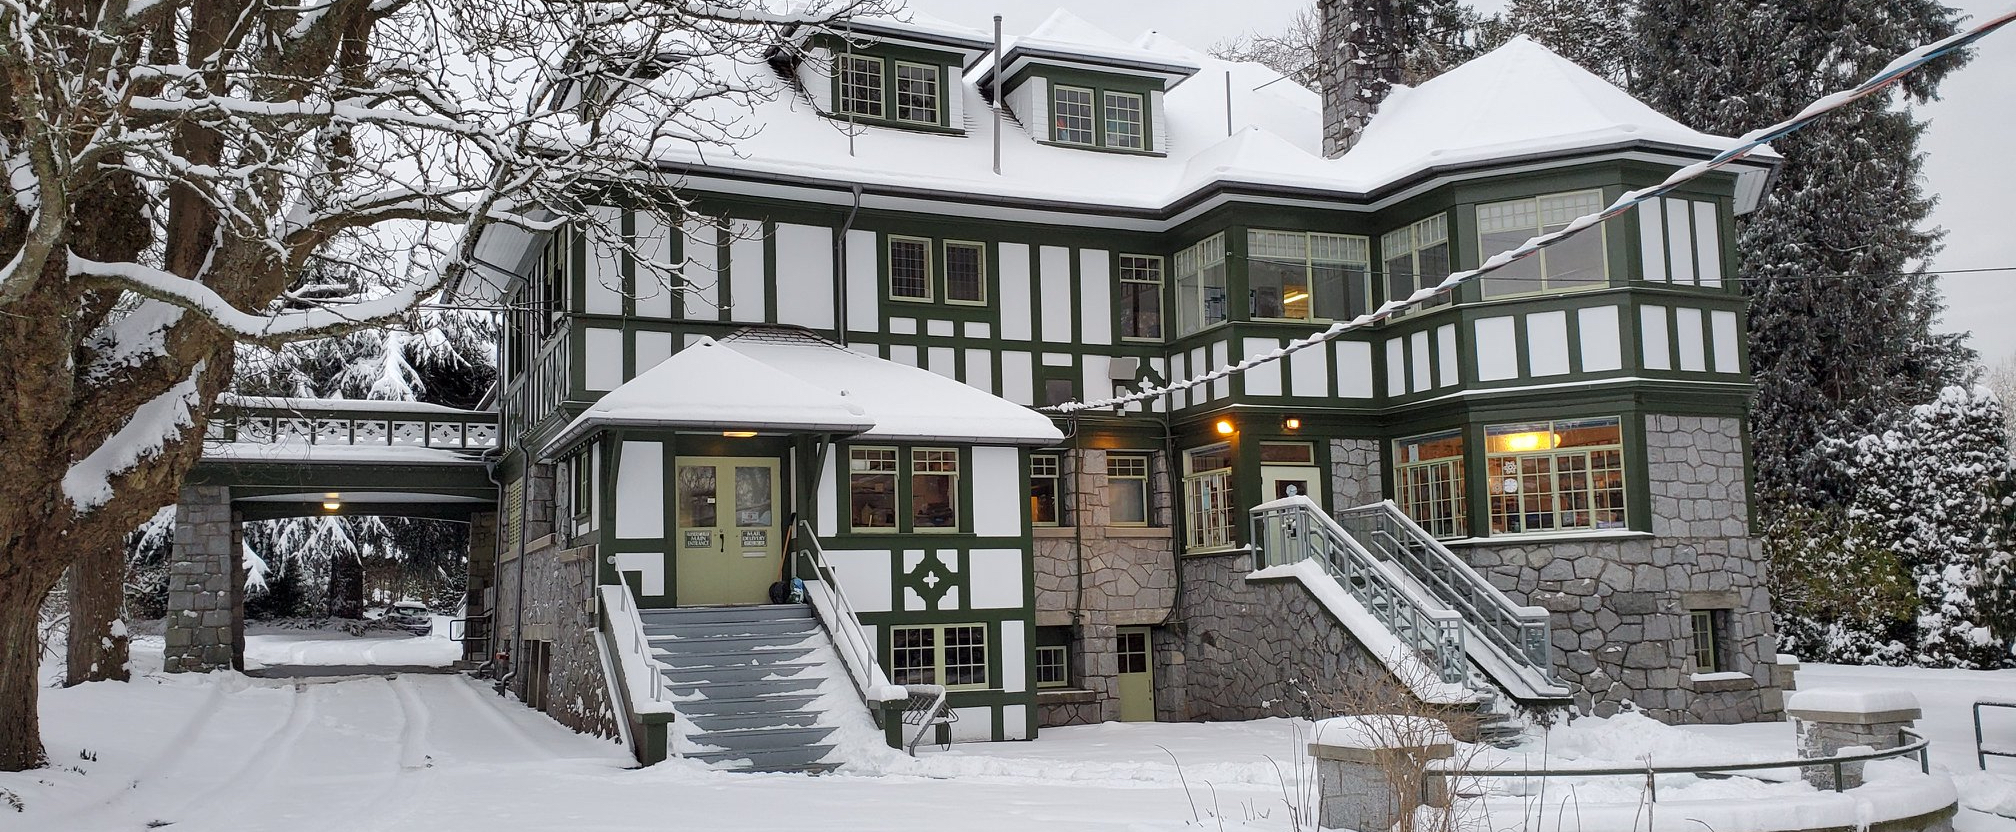 Aberthau Mansion in the snow